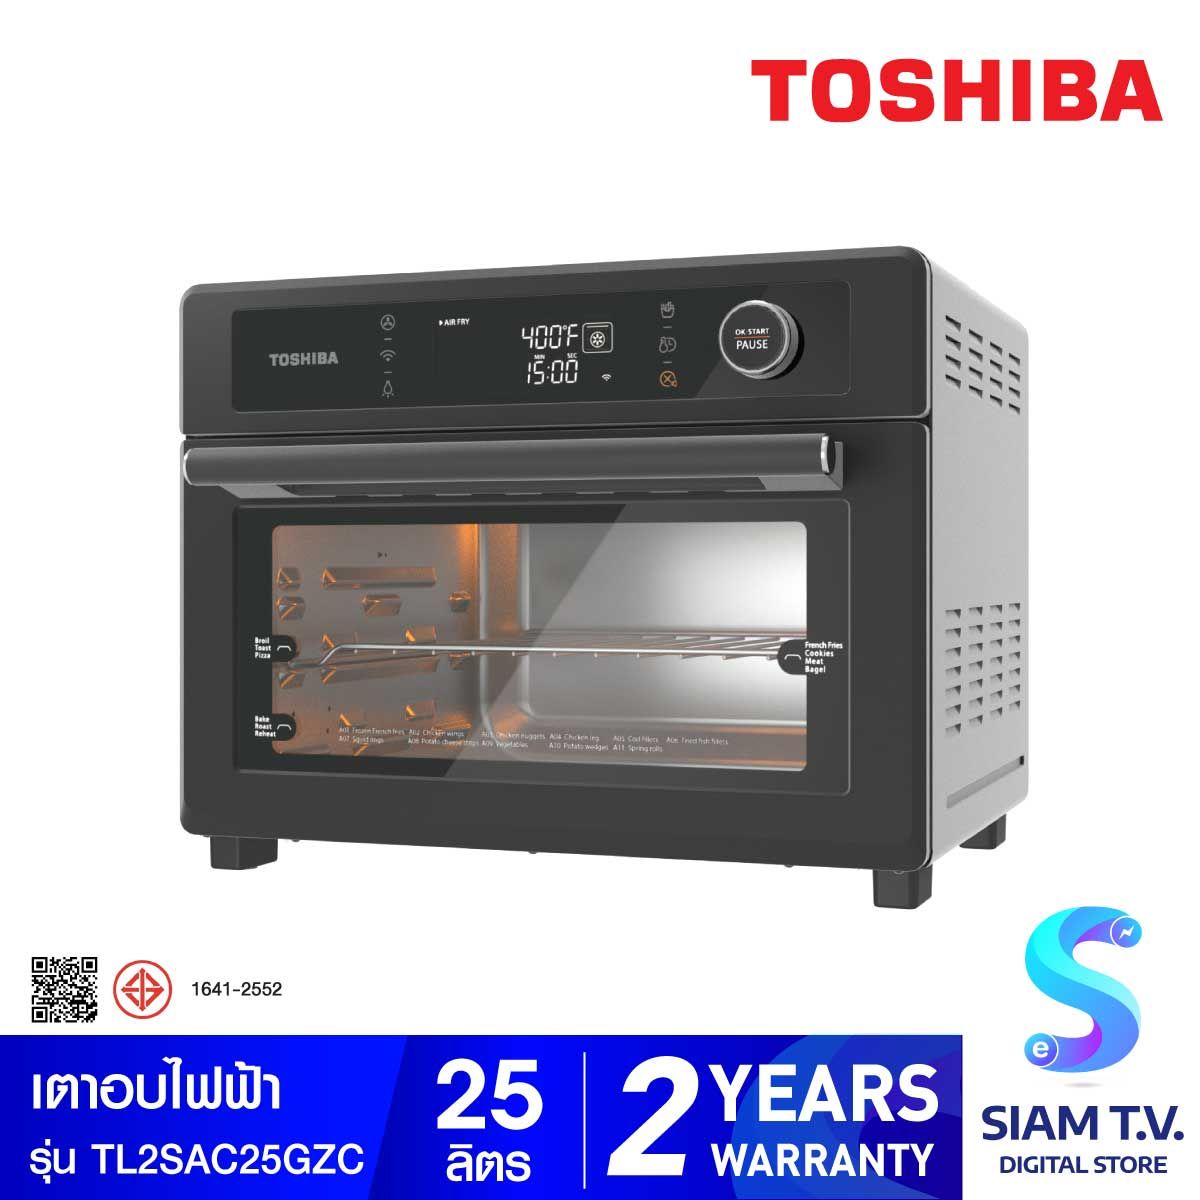 TOSHIBA เตาอบไฟฟ้า รุ่น TL2-SAC25GZC ความจุ 25 ลิตร